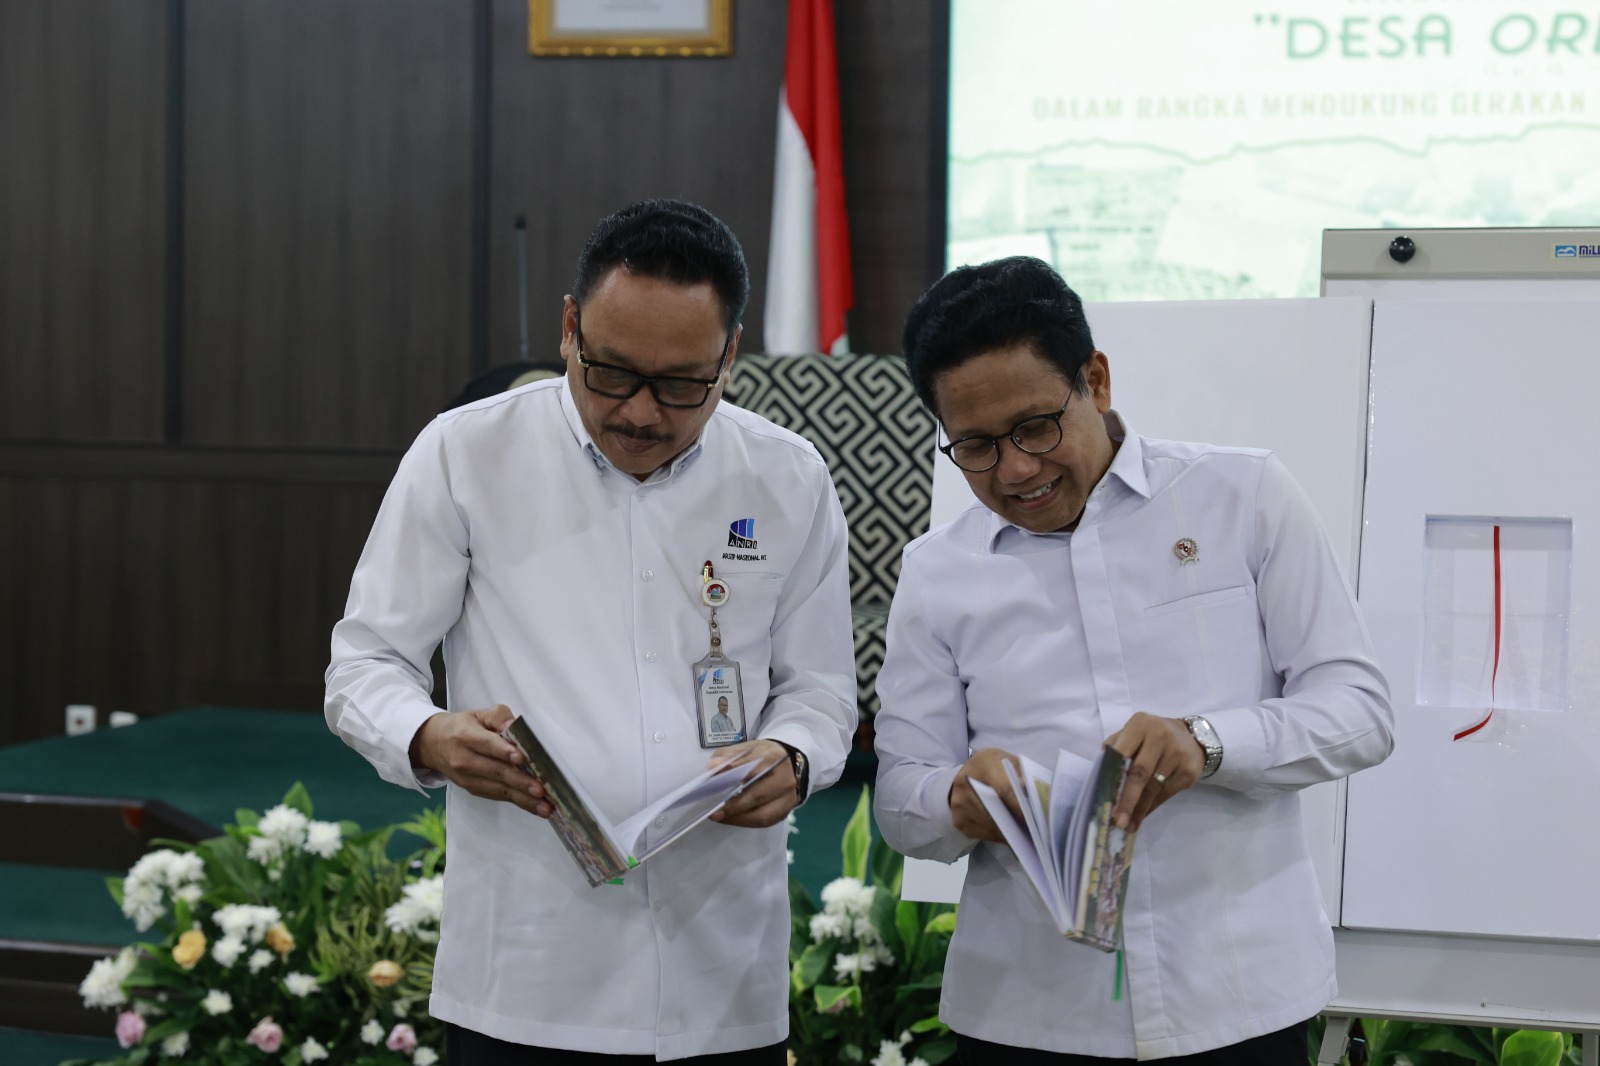 Plt. Kepala ANRI: Kementerian Desa dan ANRI Kolaborasi Penyusunan Naskah Sumber Arsip “Desa Ordonnantie” Jawa - Madura